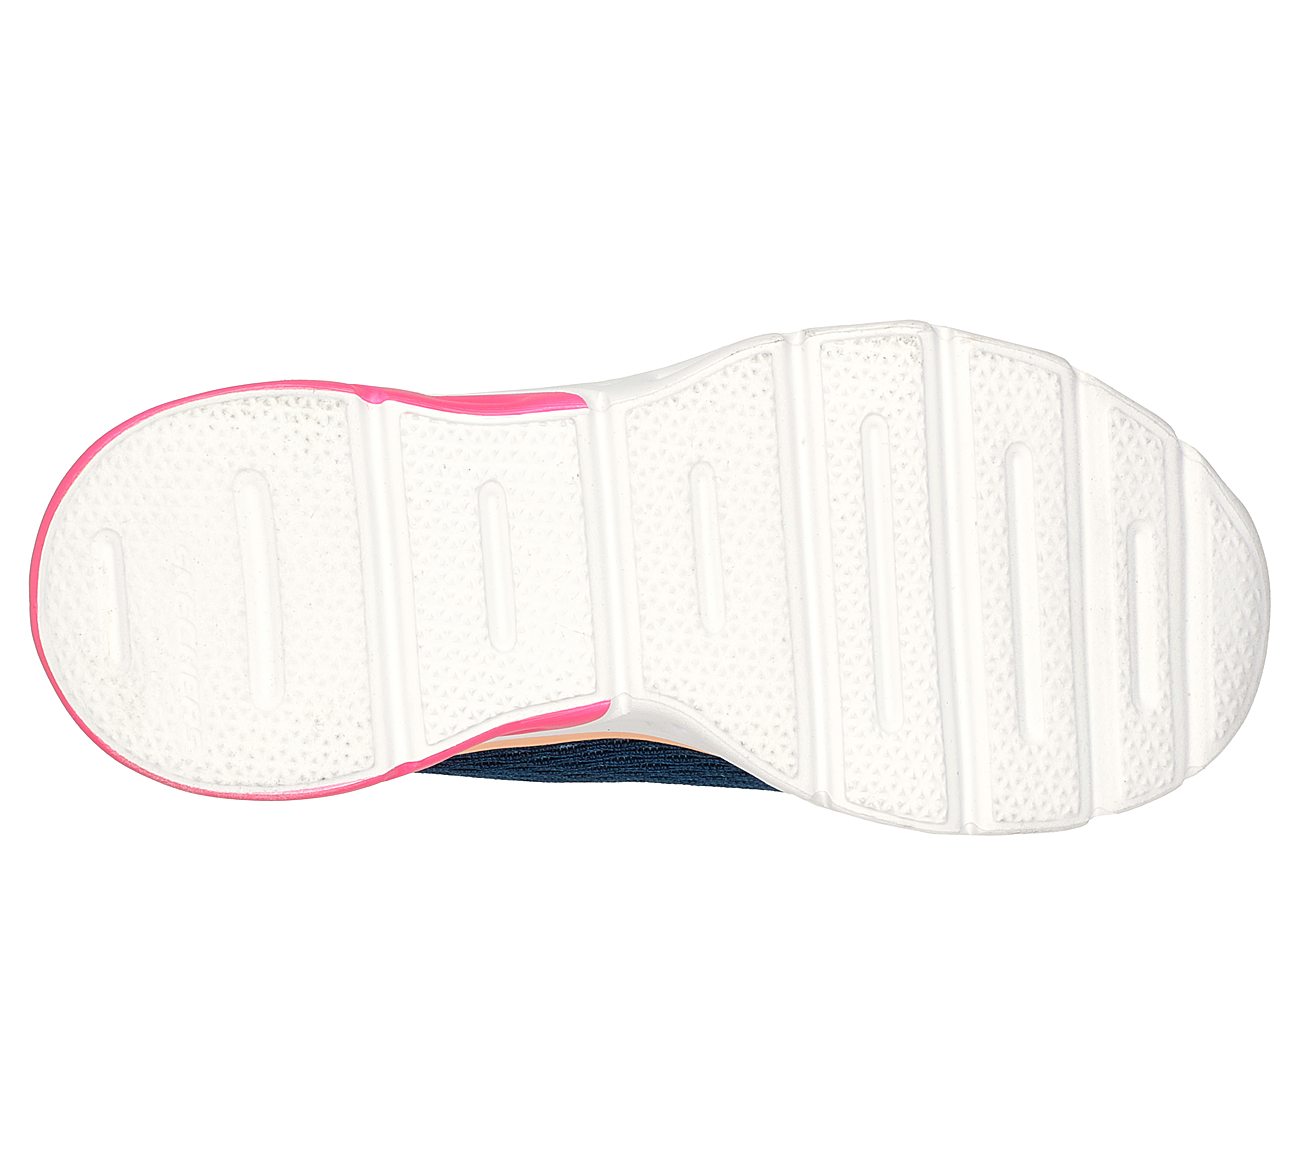 GLIDE-STEP SPORT - WAVE HEAT, NAVY/PINK Footwear Bottom View